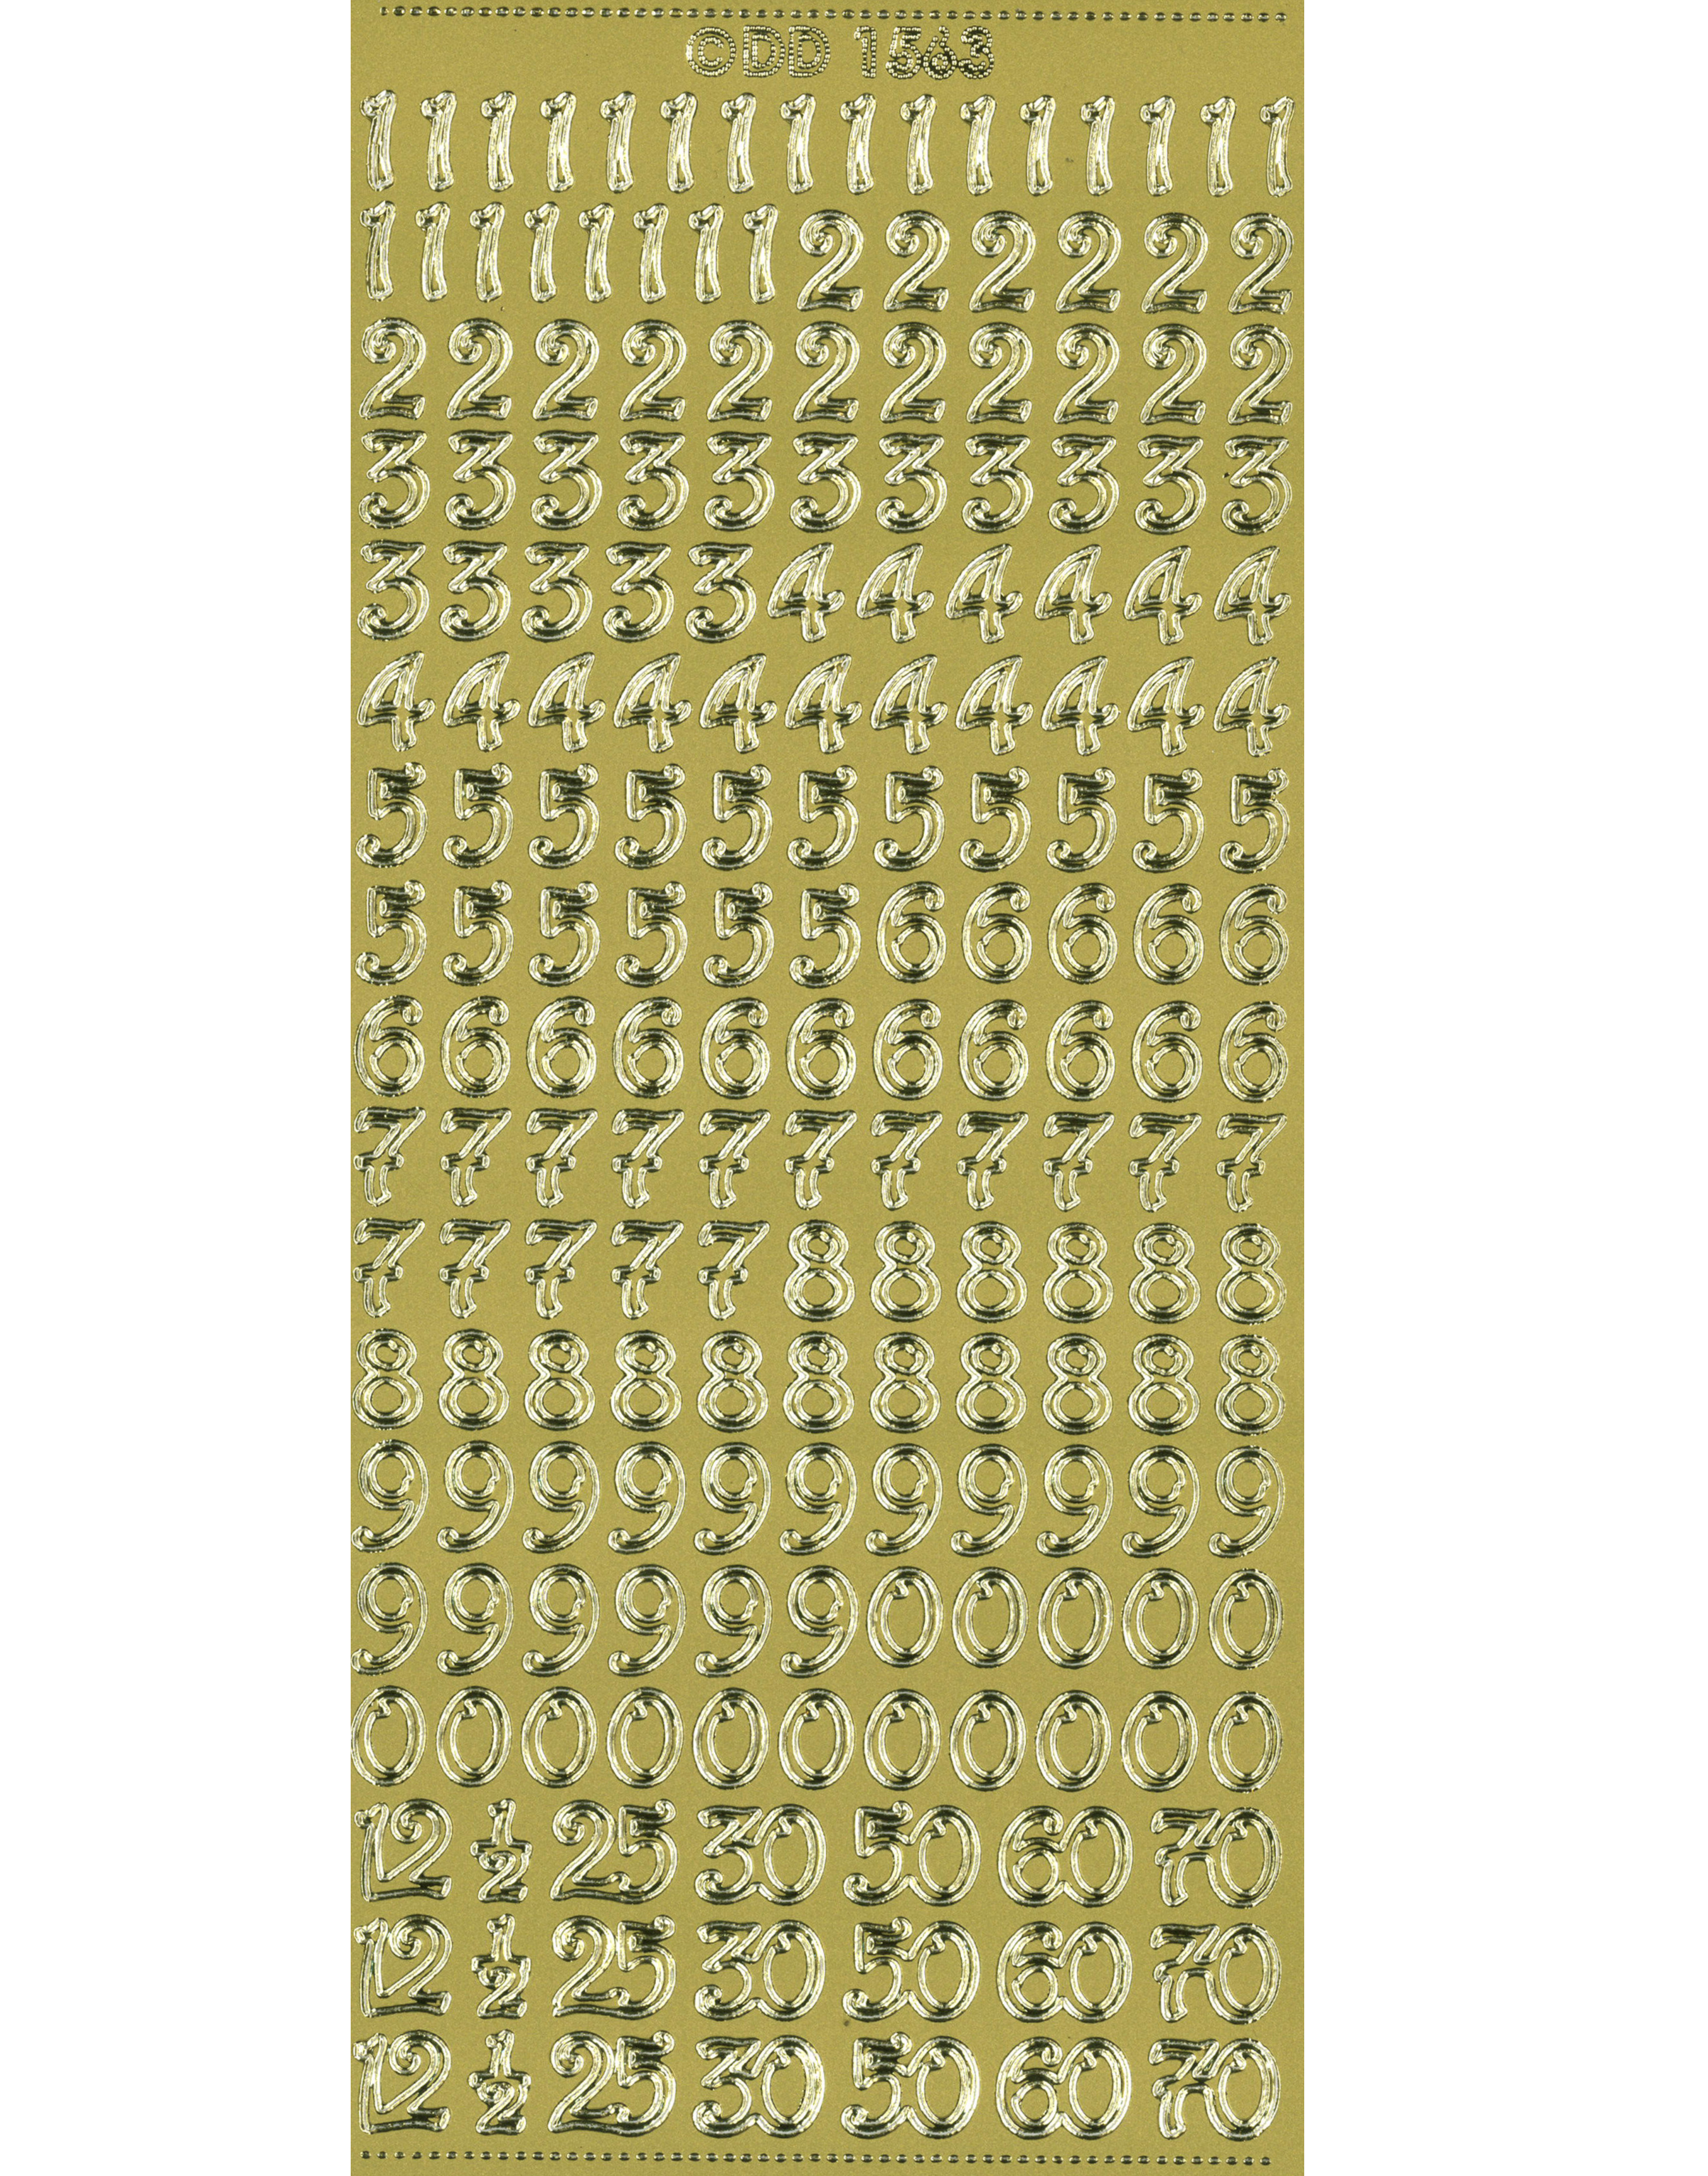 Shiny Outline Stickers Zahlen verschnörkelt Numbers 123 curled gold Konturensticker 10x23cm Bogen